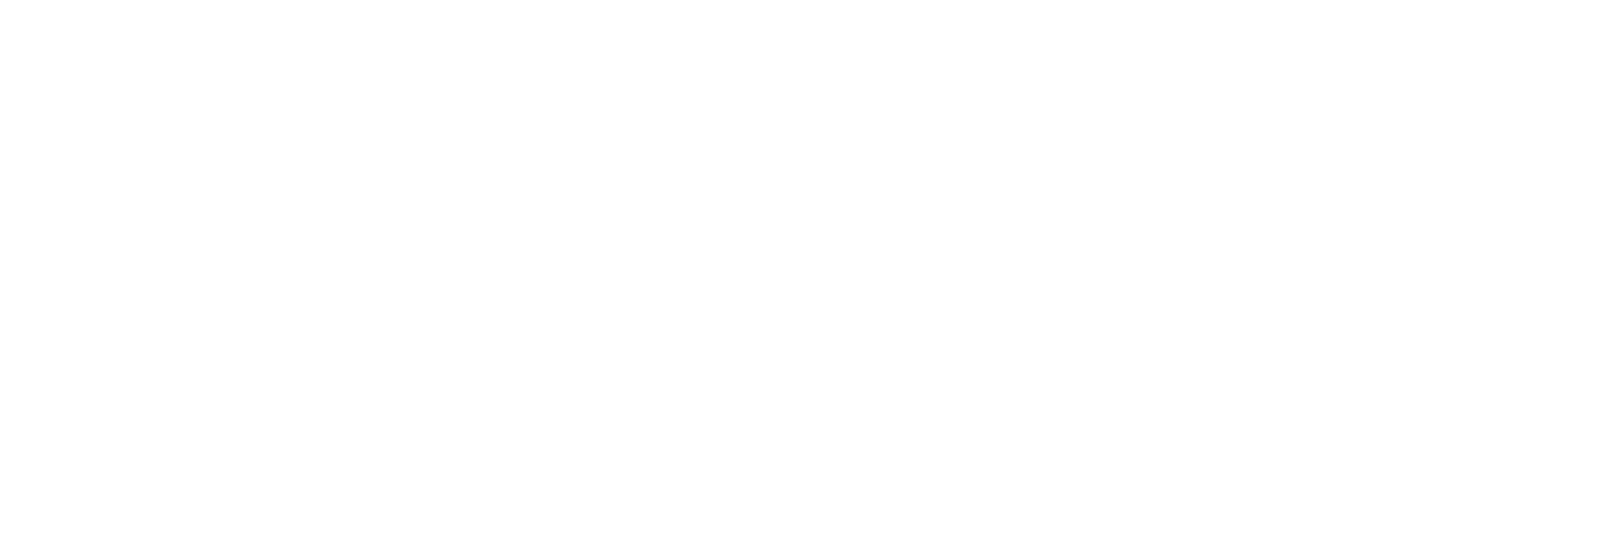 Kellogg's logo large for dark backgrounds (transparent PNG)